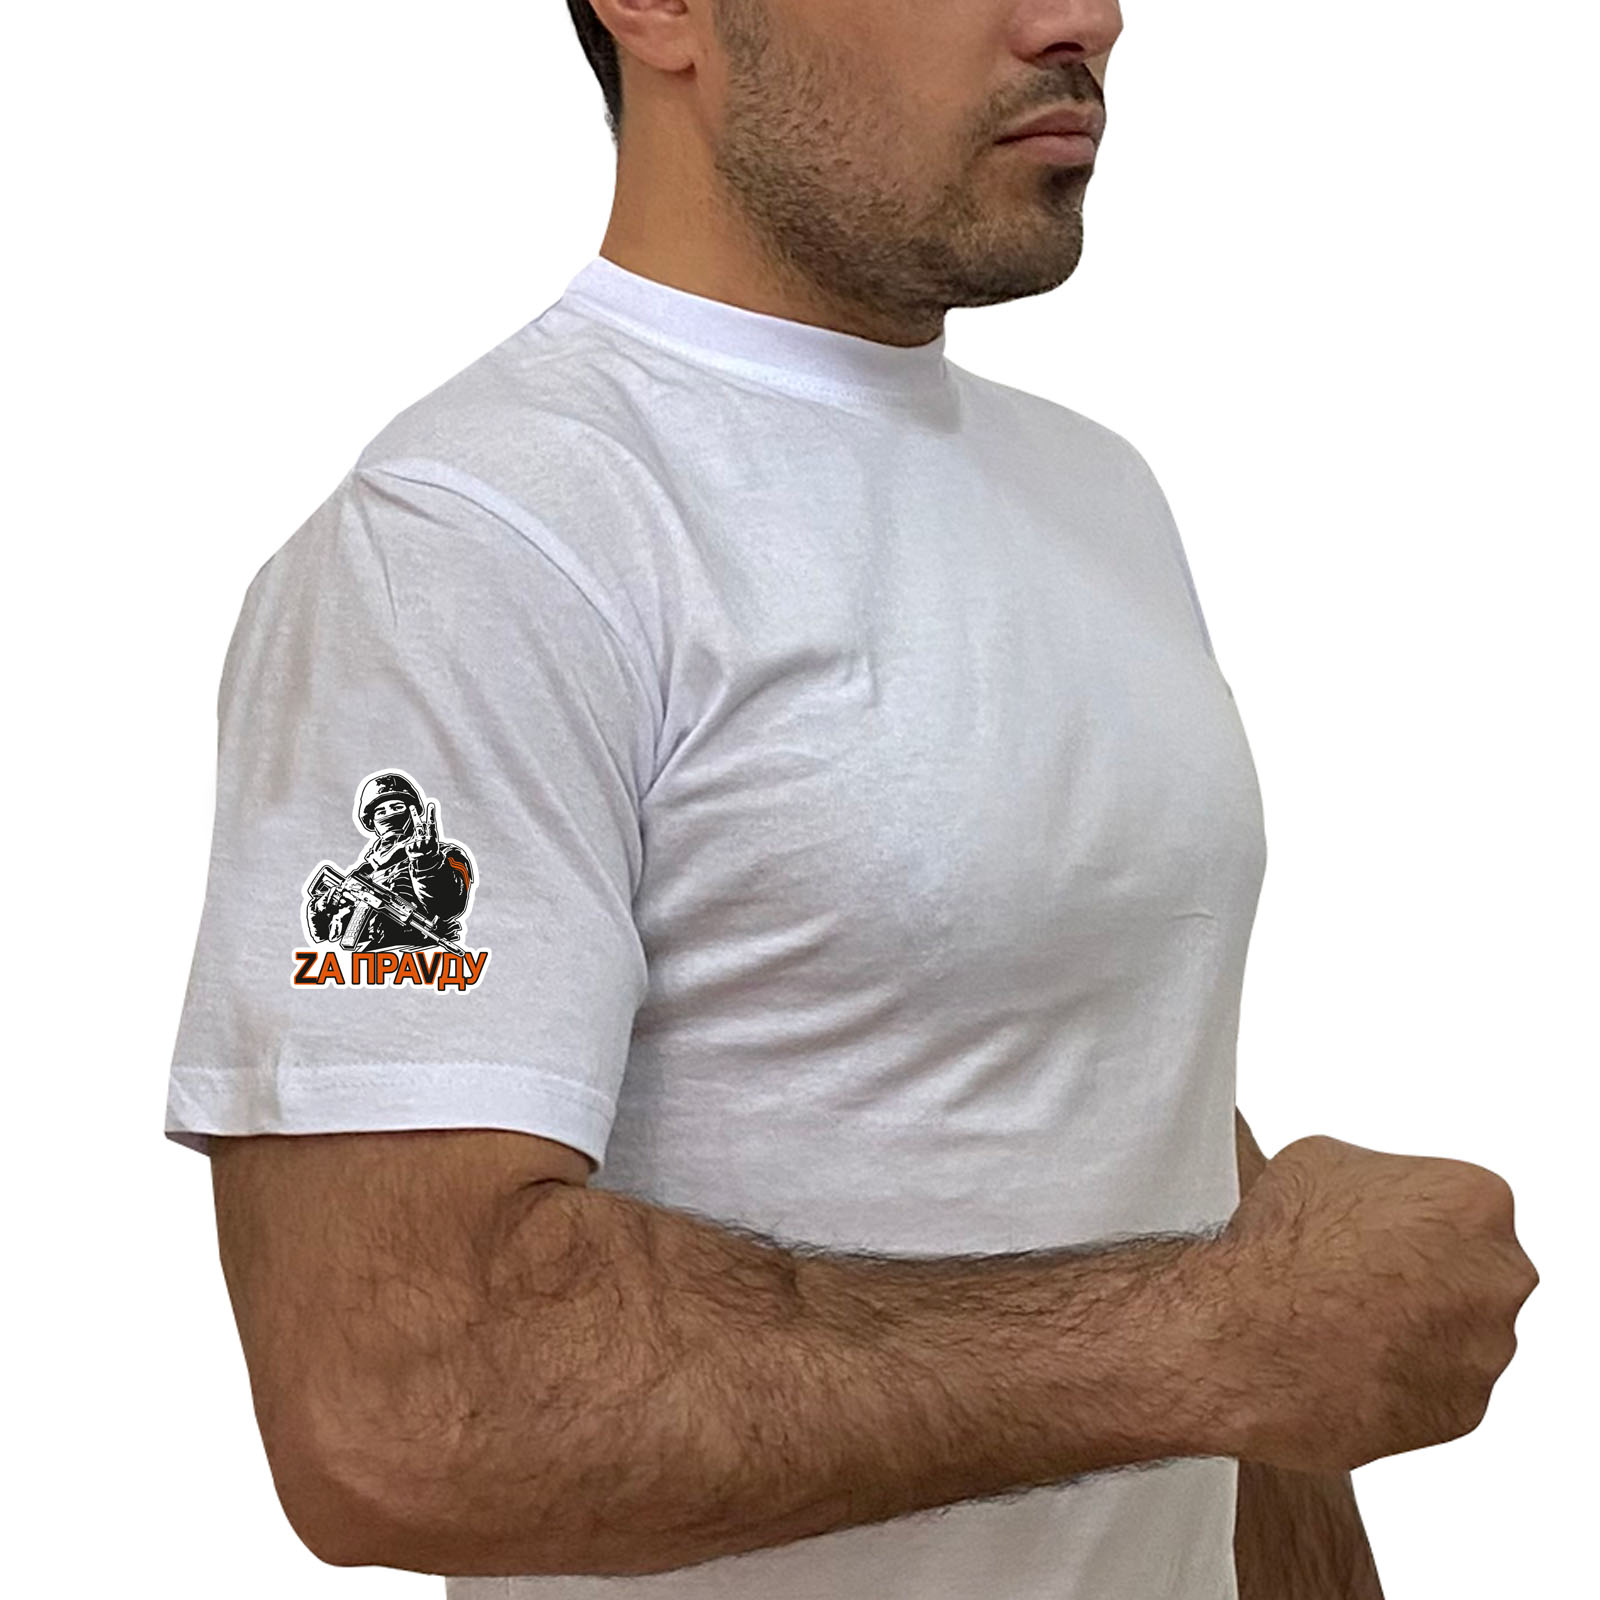 Купить белую футболку "Zа праVду" с трансфером на рукаве